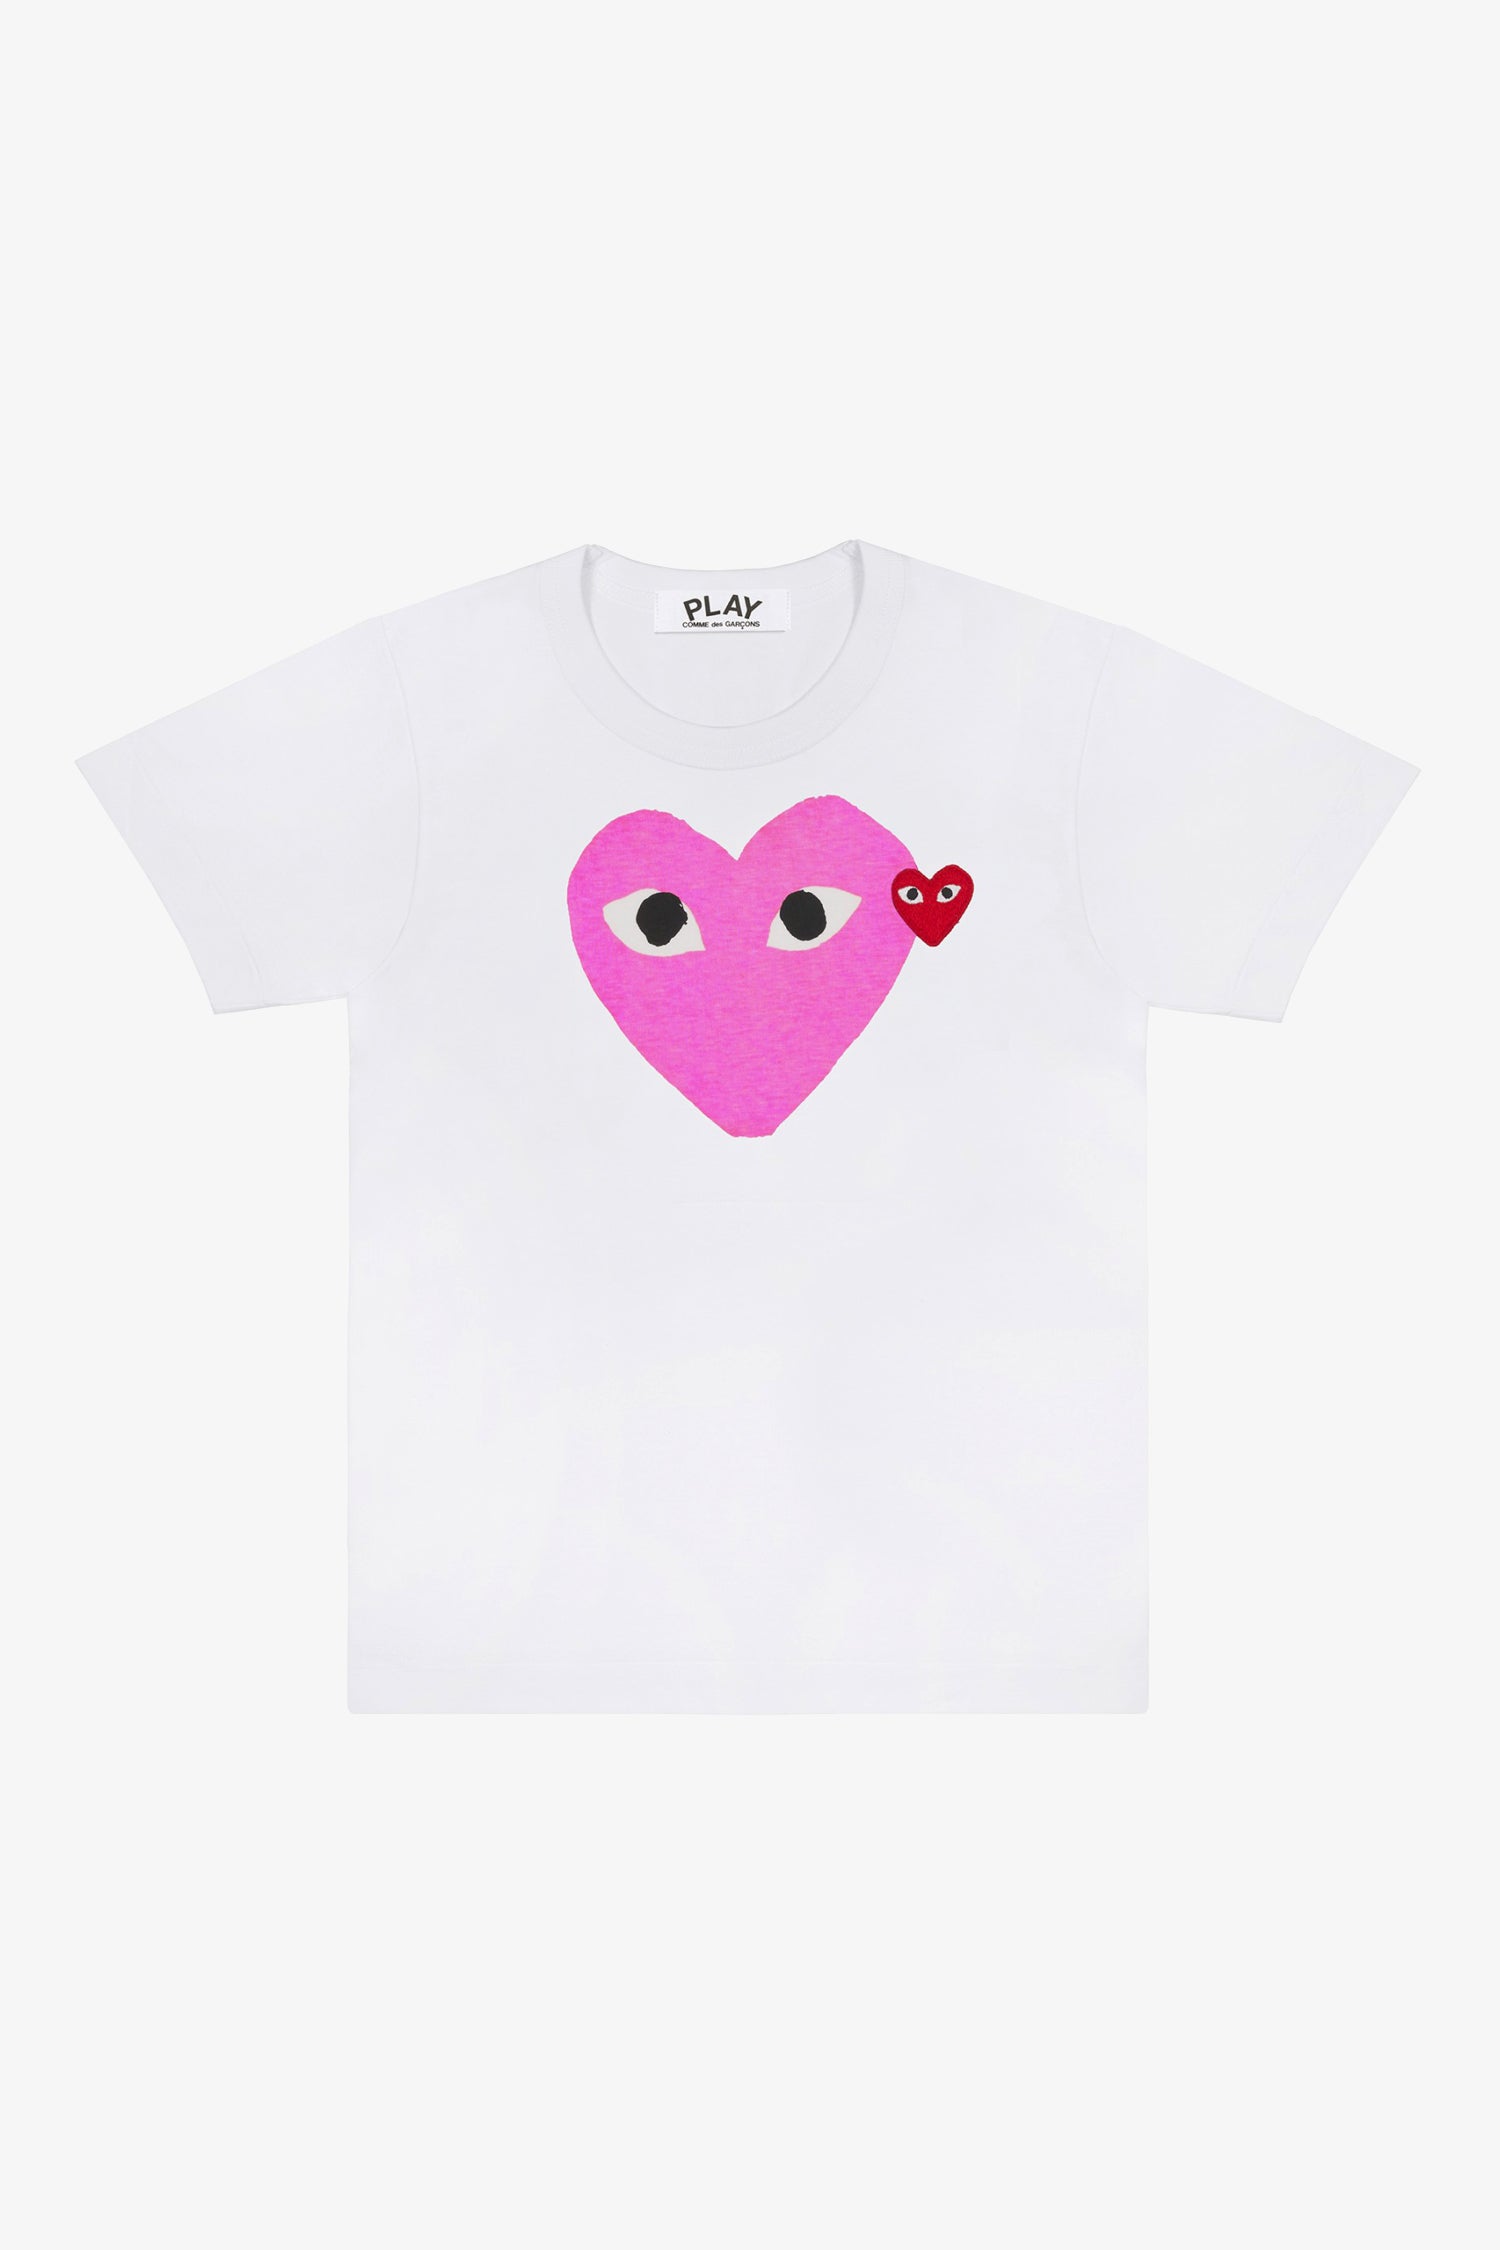 Selectshop FRAME - COMME DES GARCONS PLAY Big Pink Heart T-Shirt T-Shirt Dubai